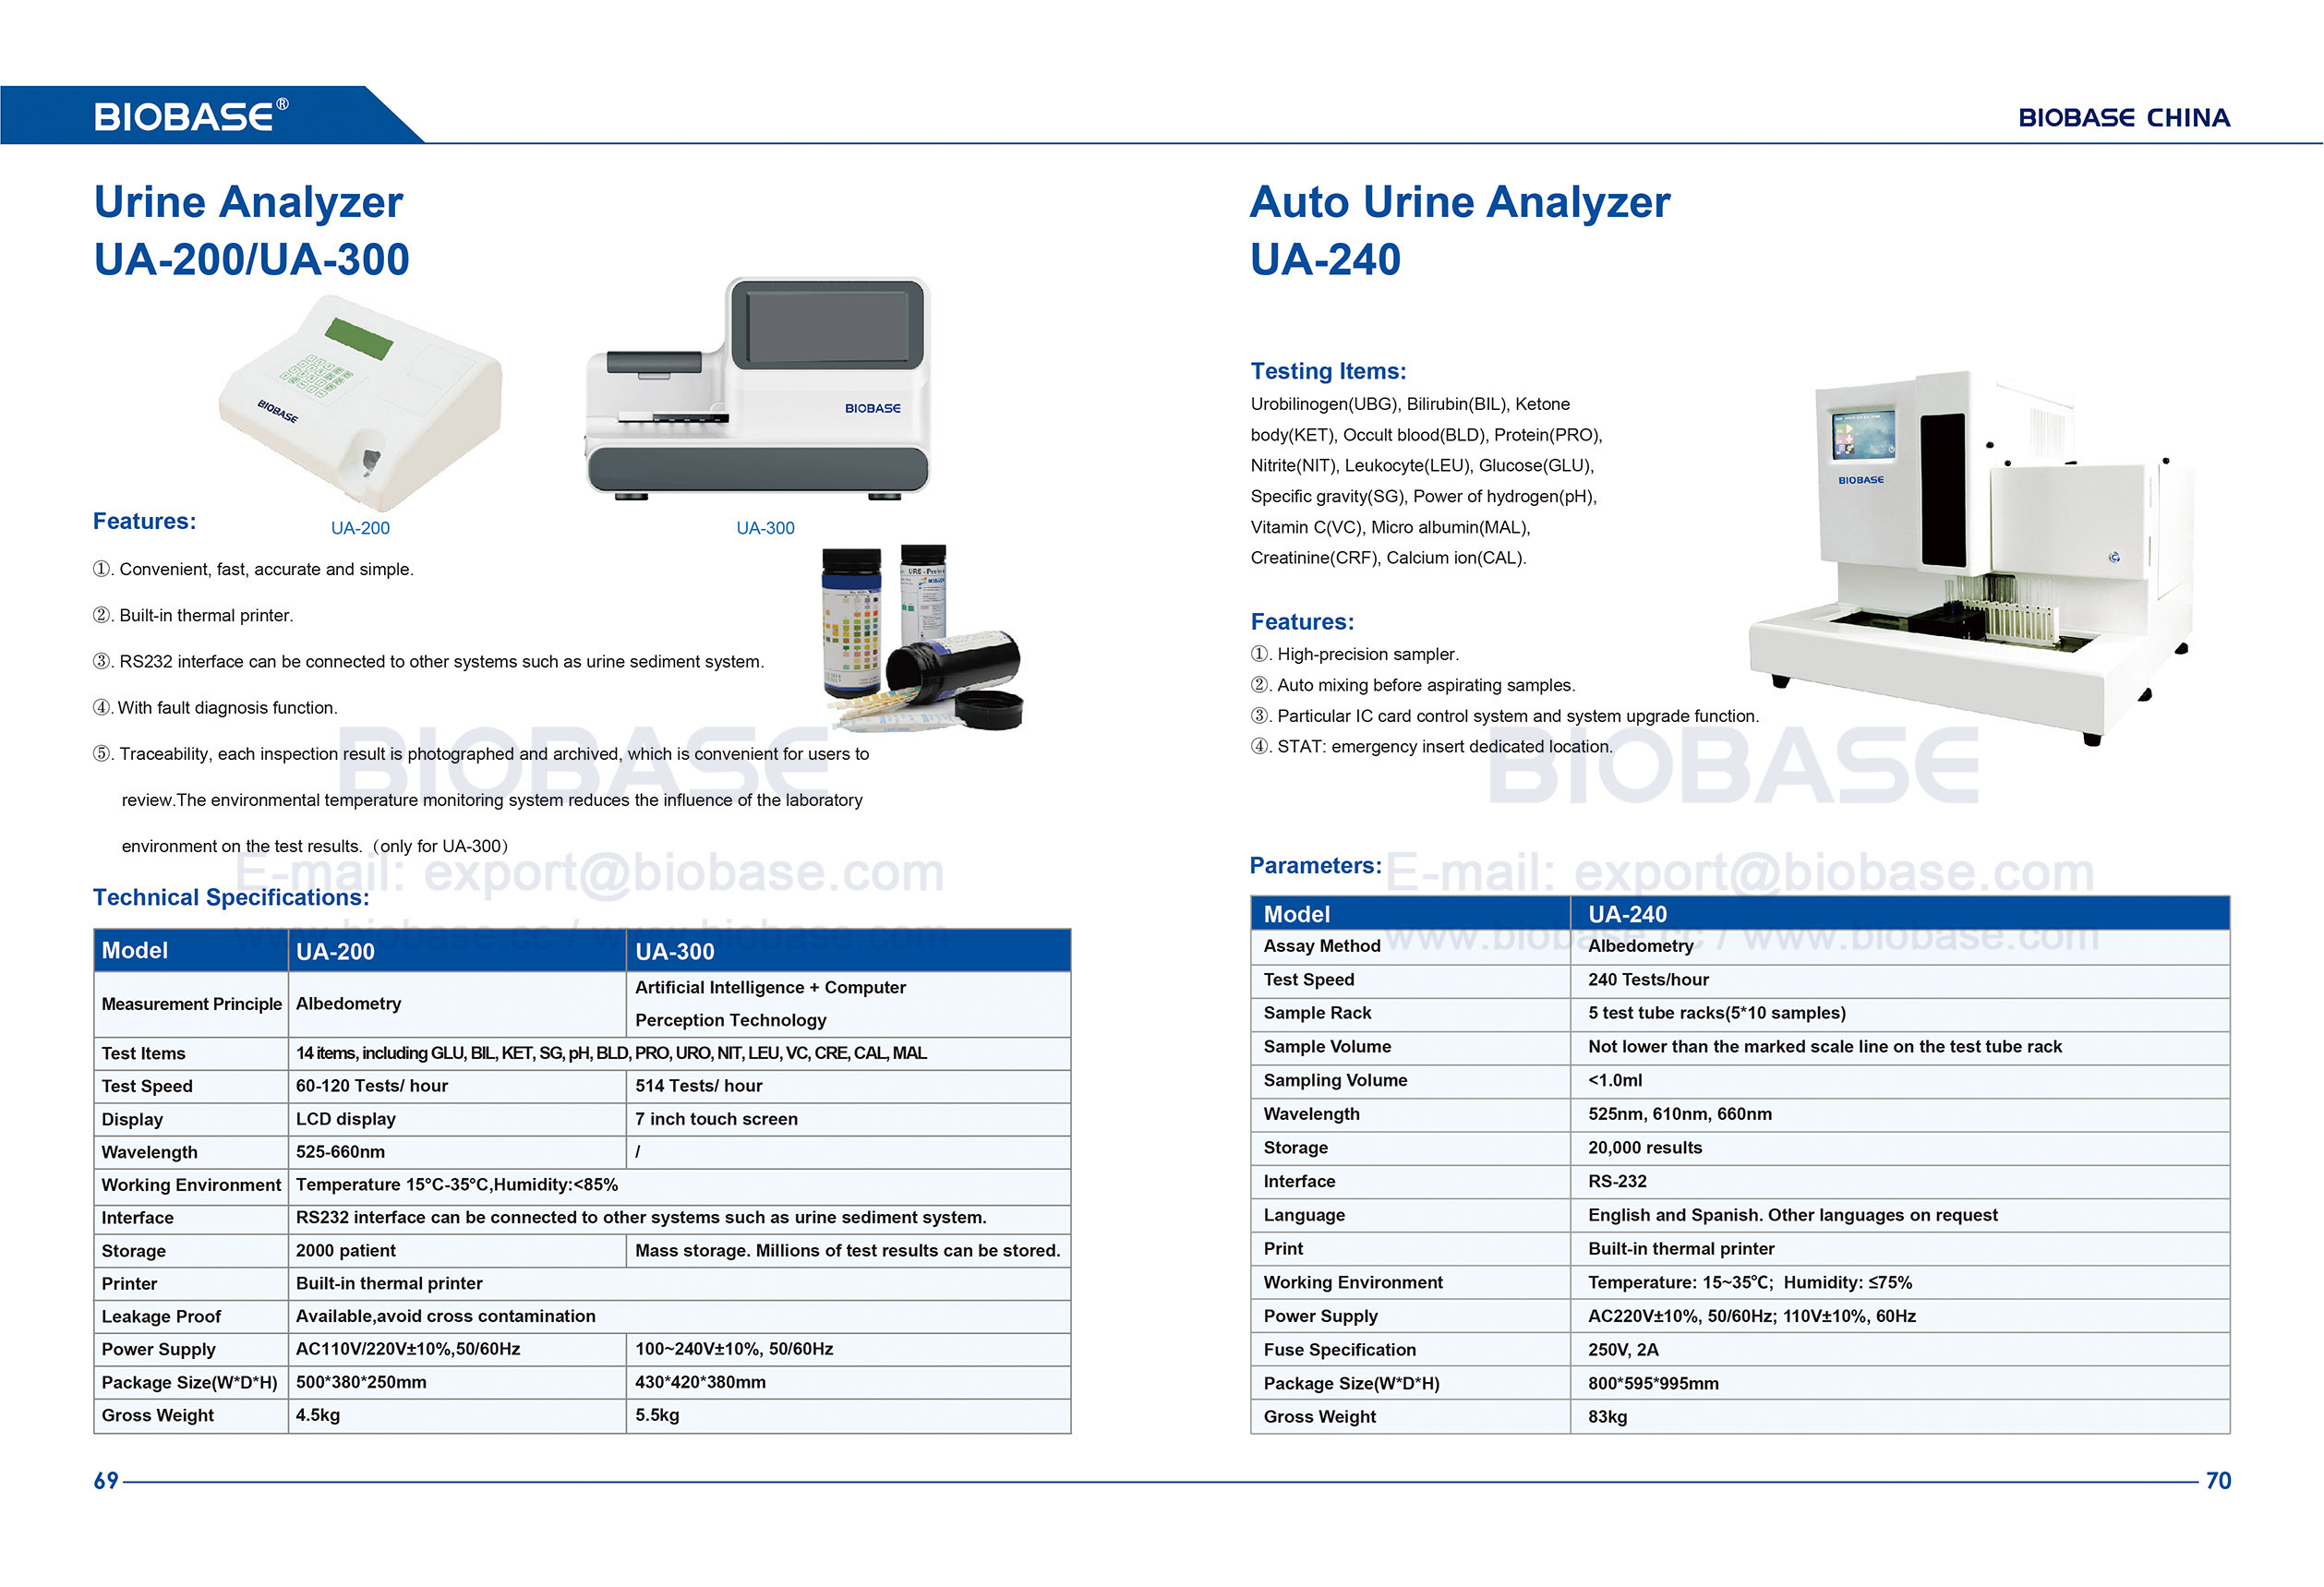 69-70 UA-200 UA-300 Auto Urine Analyzer & UA-240 Urine Analyzer